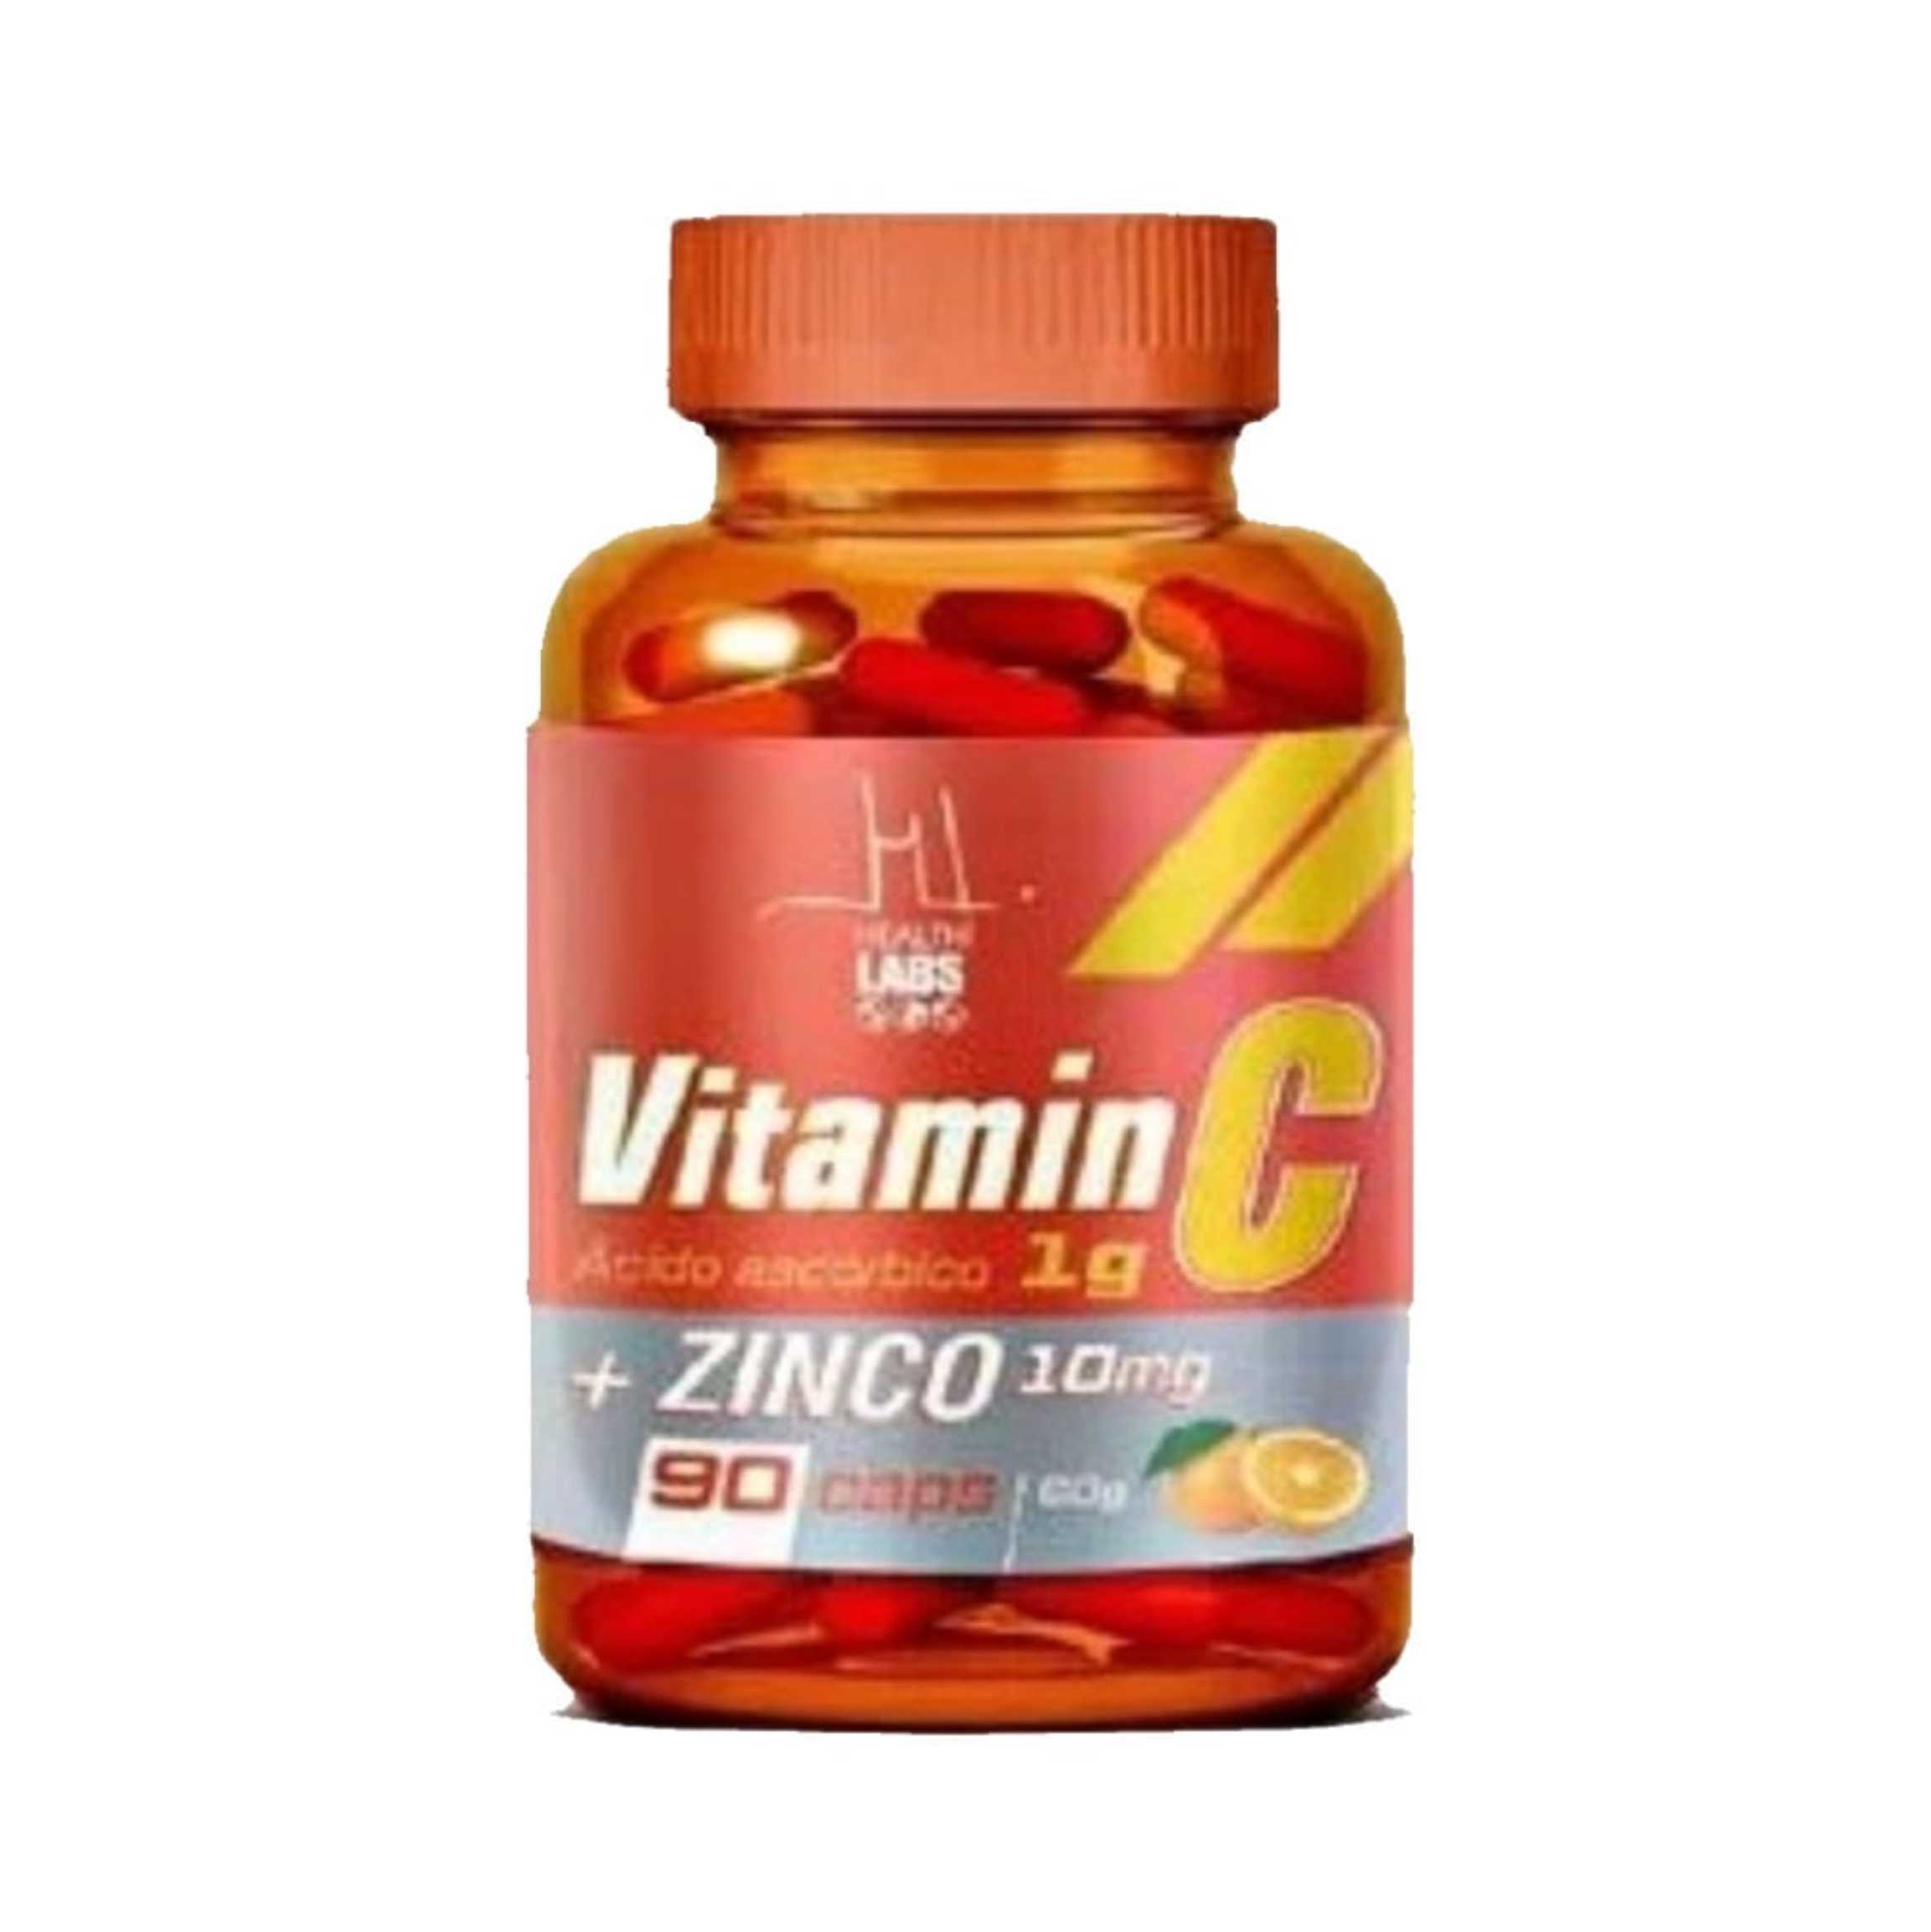 VITAMINA C + ZINCO 90 CAPS HEALHT LABS 👩‍⚕️🍊